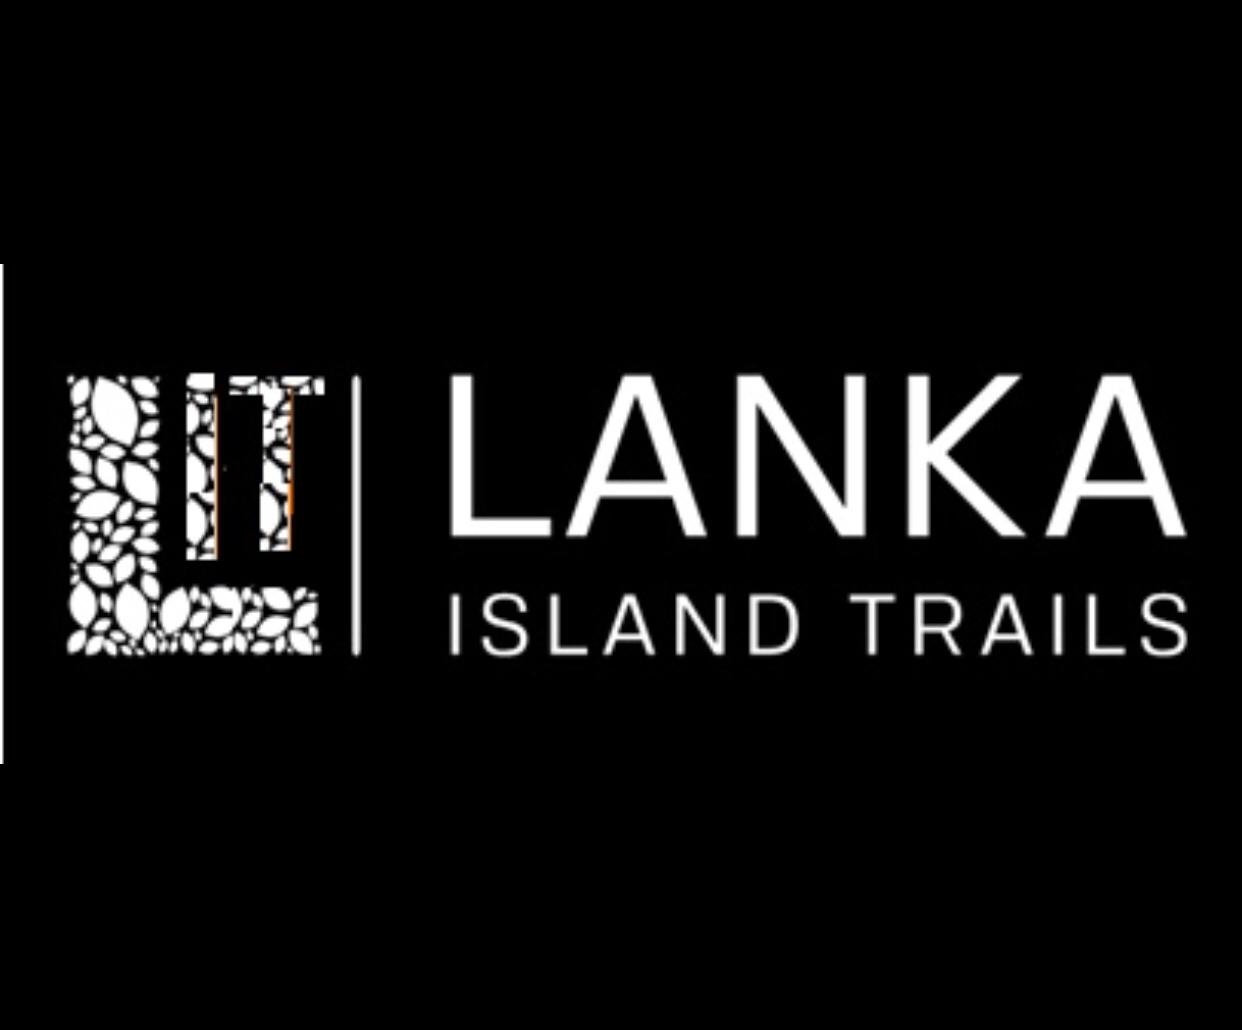 LIT Lanka Island Trails